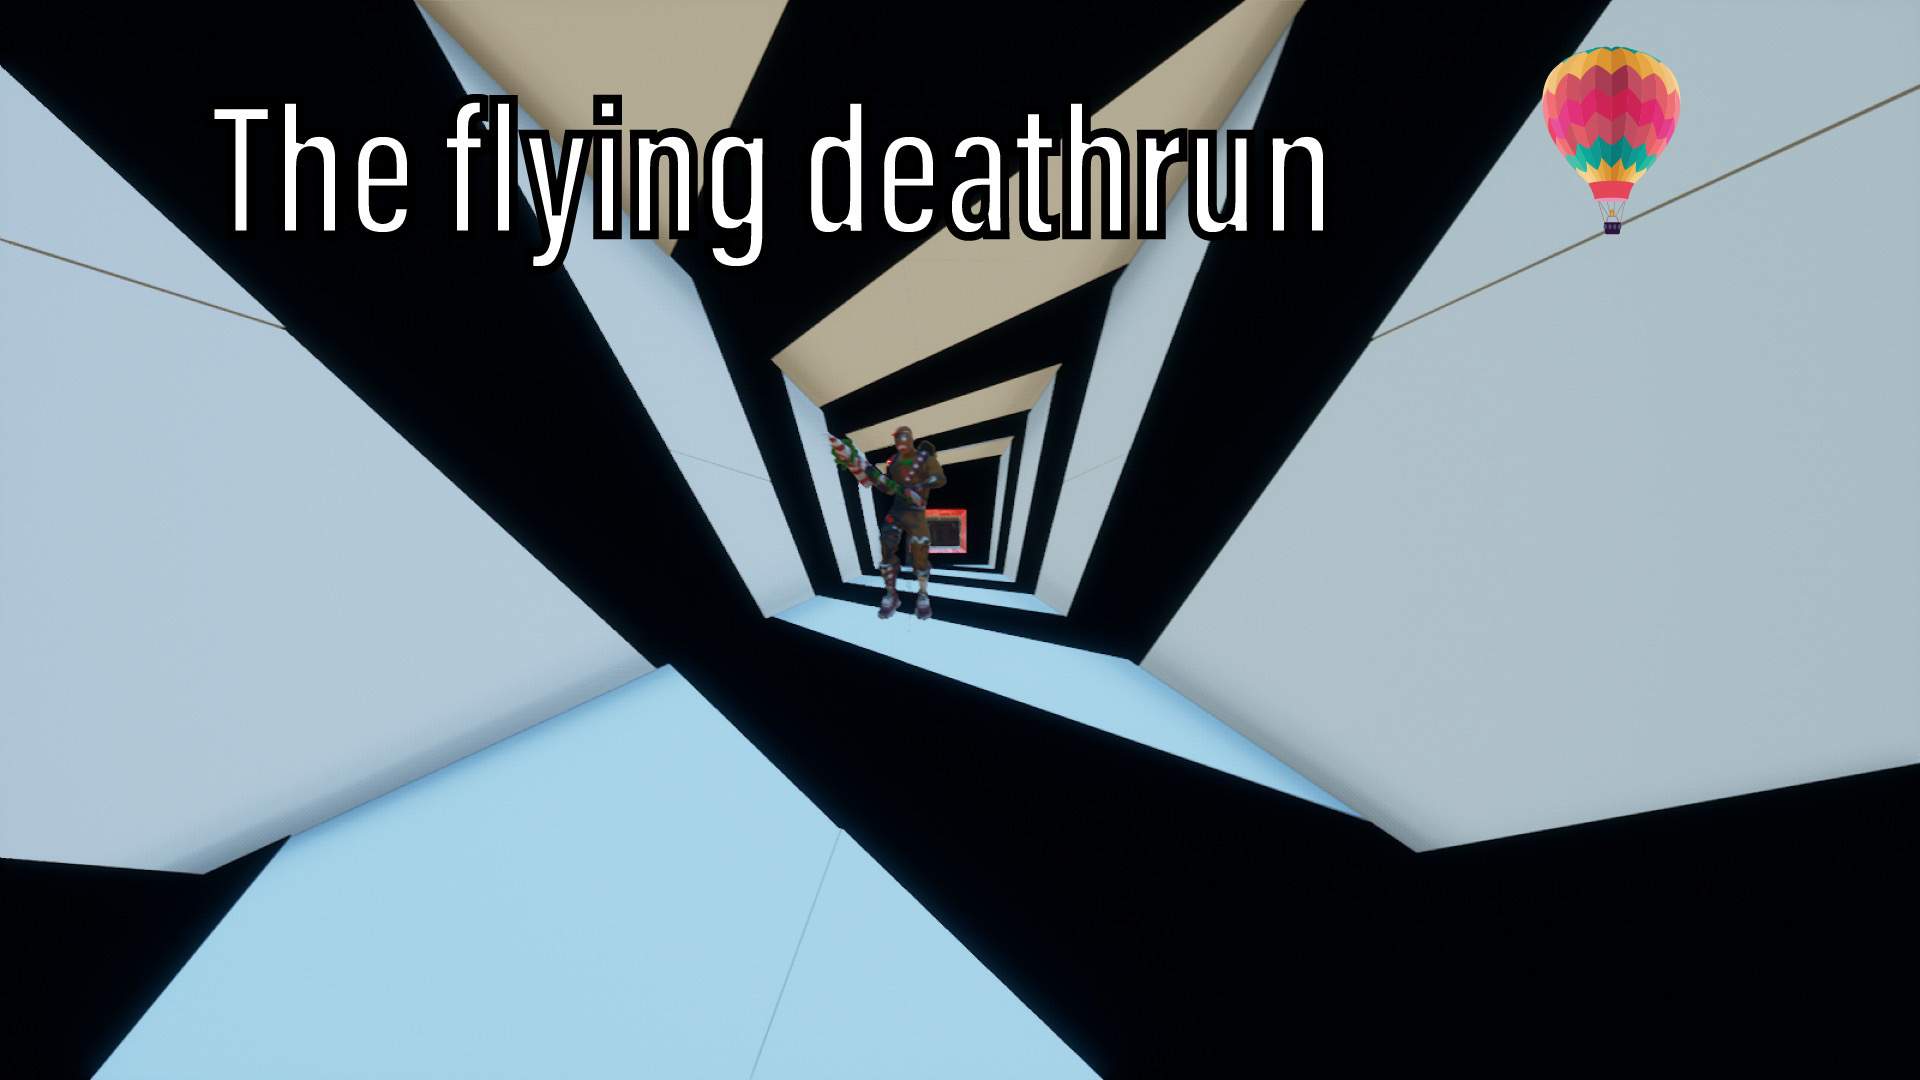 THE FLYING DEATHRUN